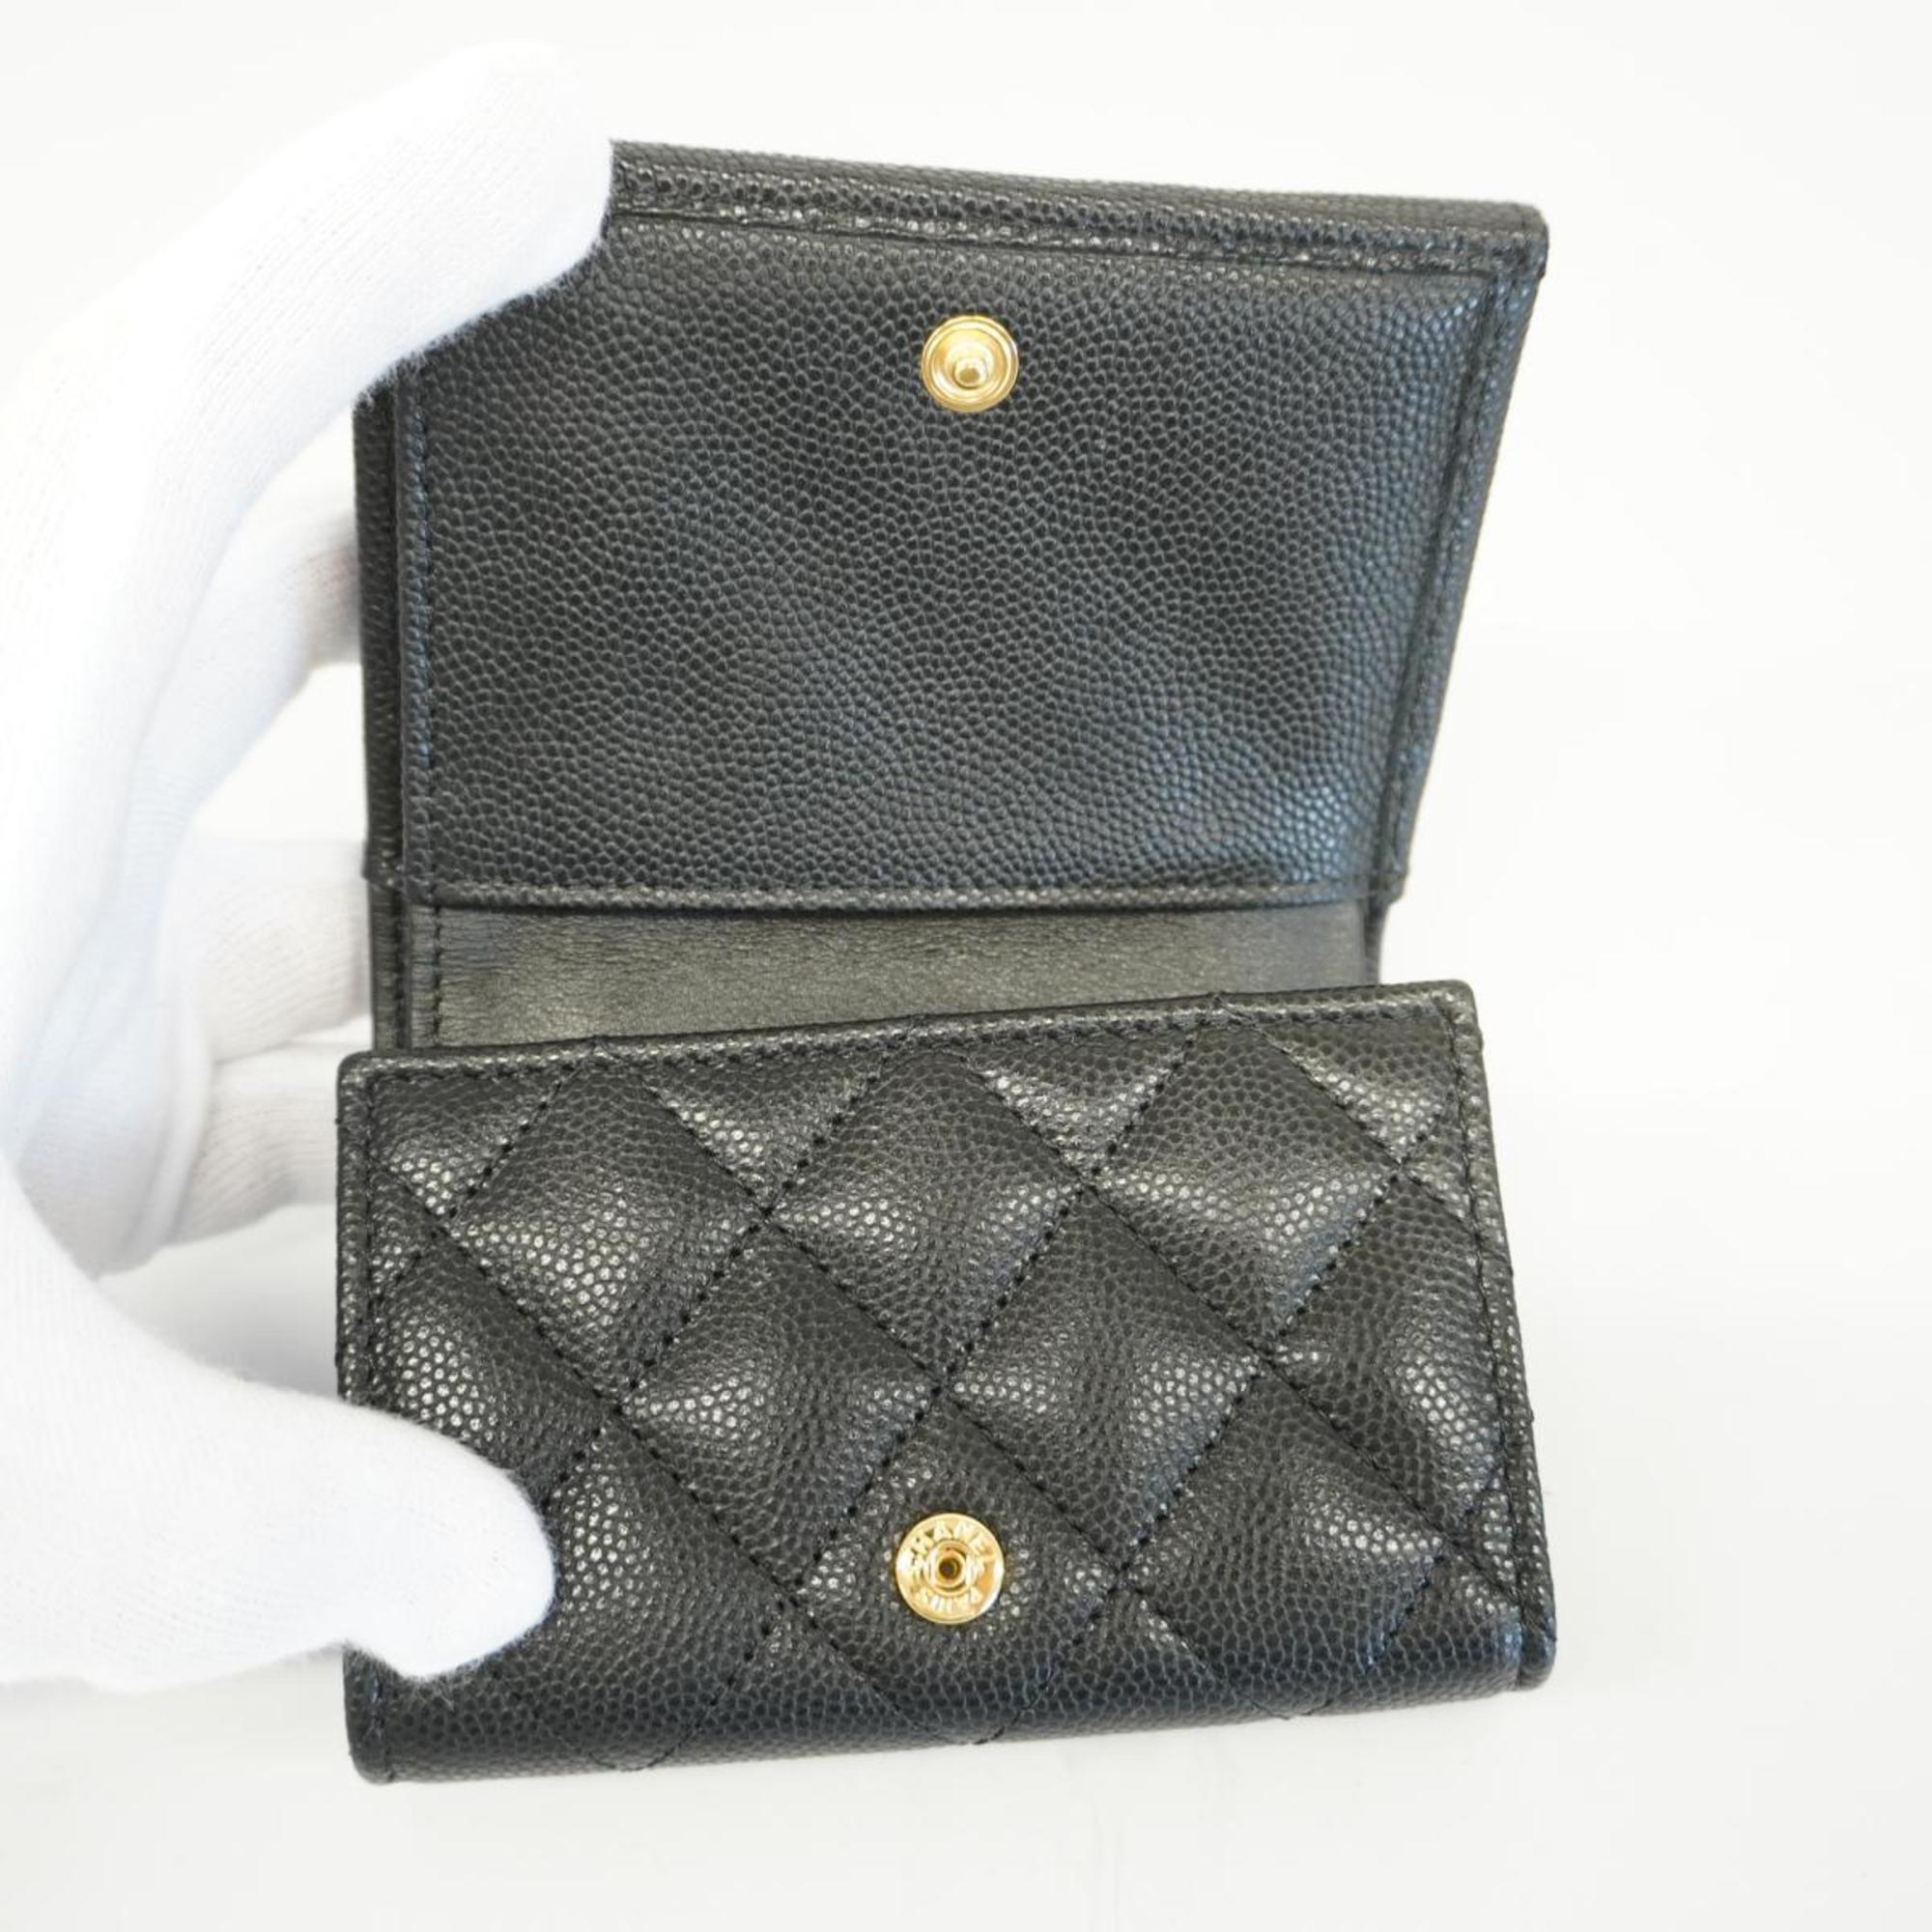 Chanel Tri-fold Wallet Matelasse Caviar Skin Black Women's